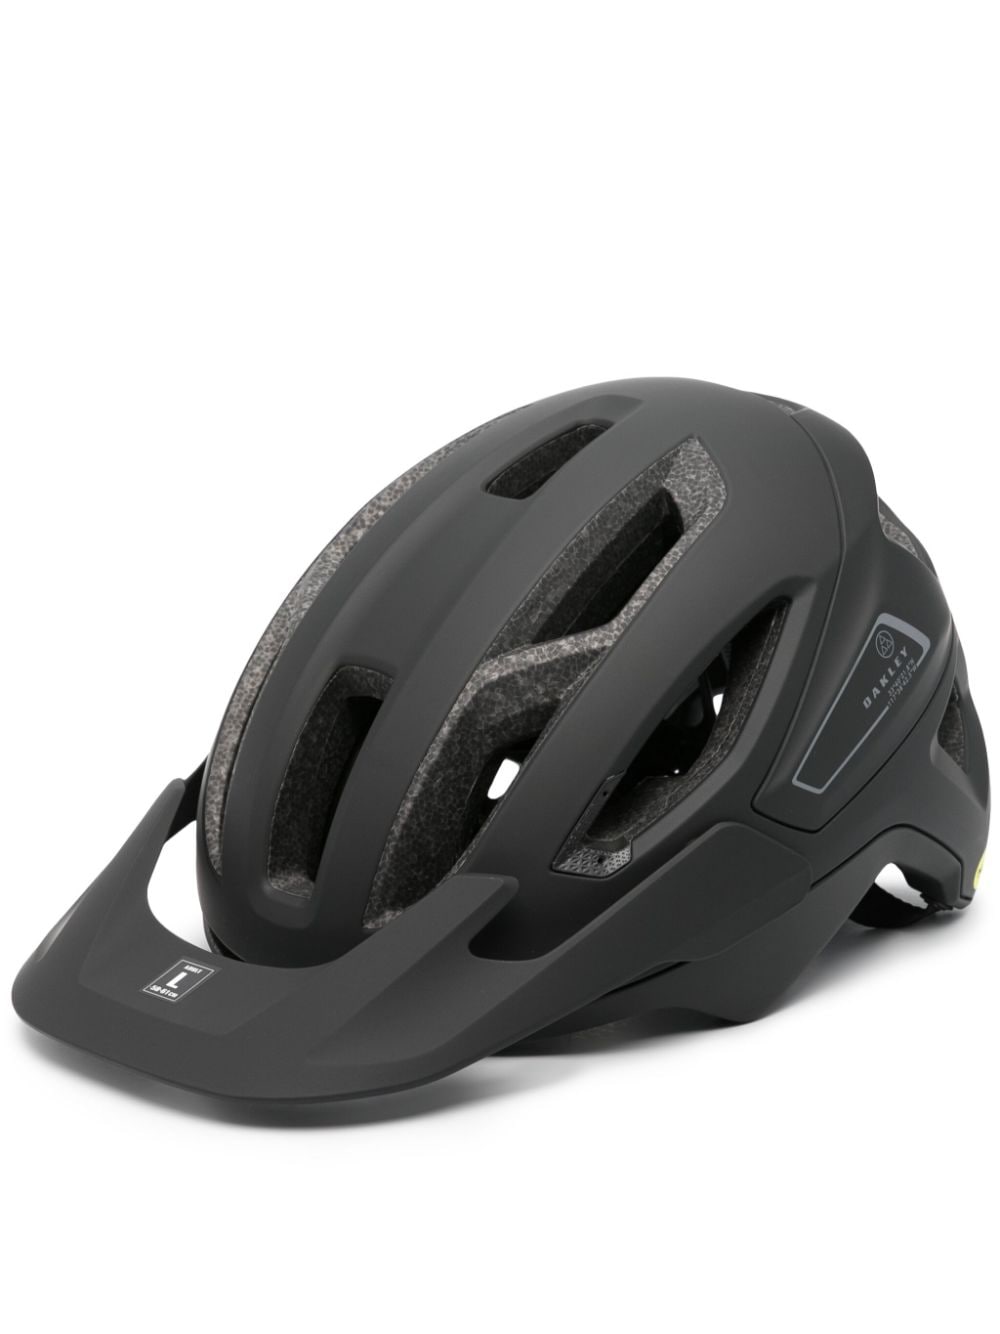 DRT3 Trail performance helmet<BR/><BR/><BR/>